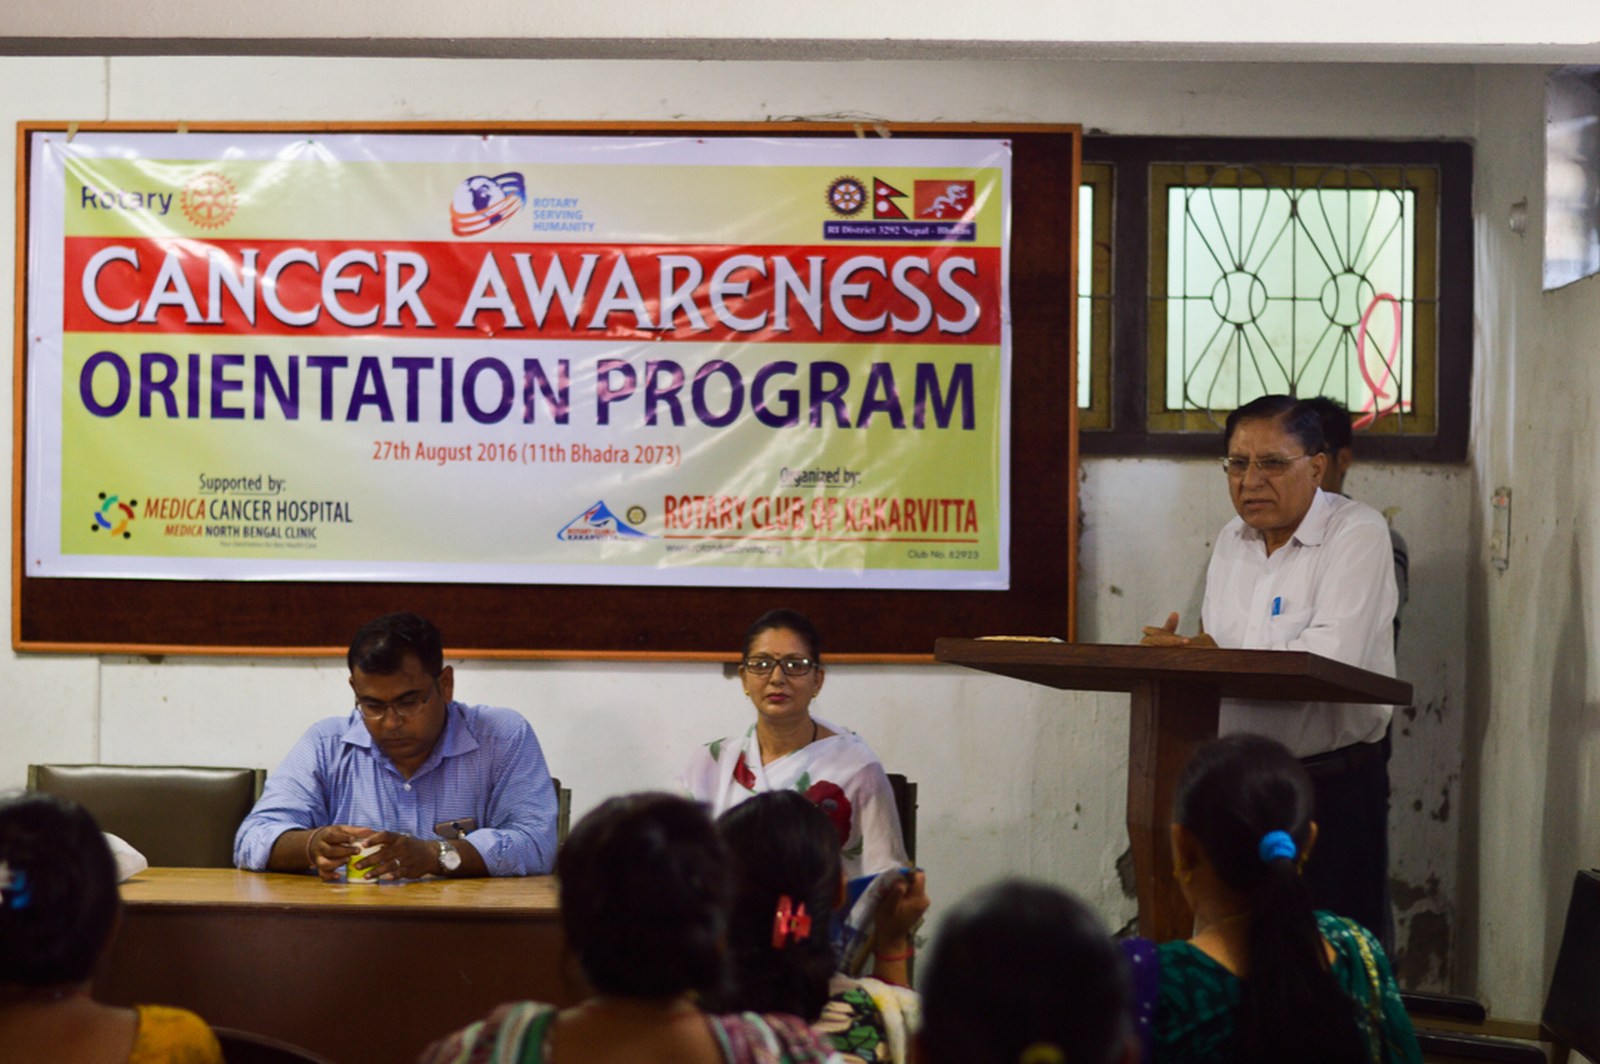 Cancer-Awareness-Orientation-Program-2016-Rotary-Club-of-Kakarvitta-27